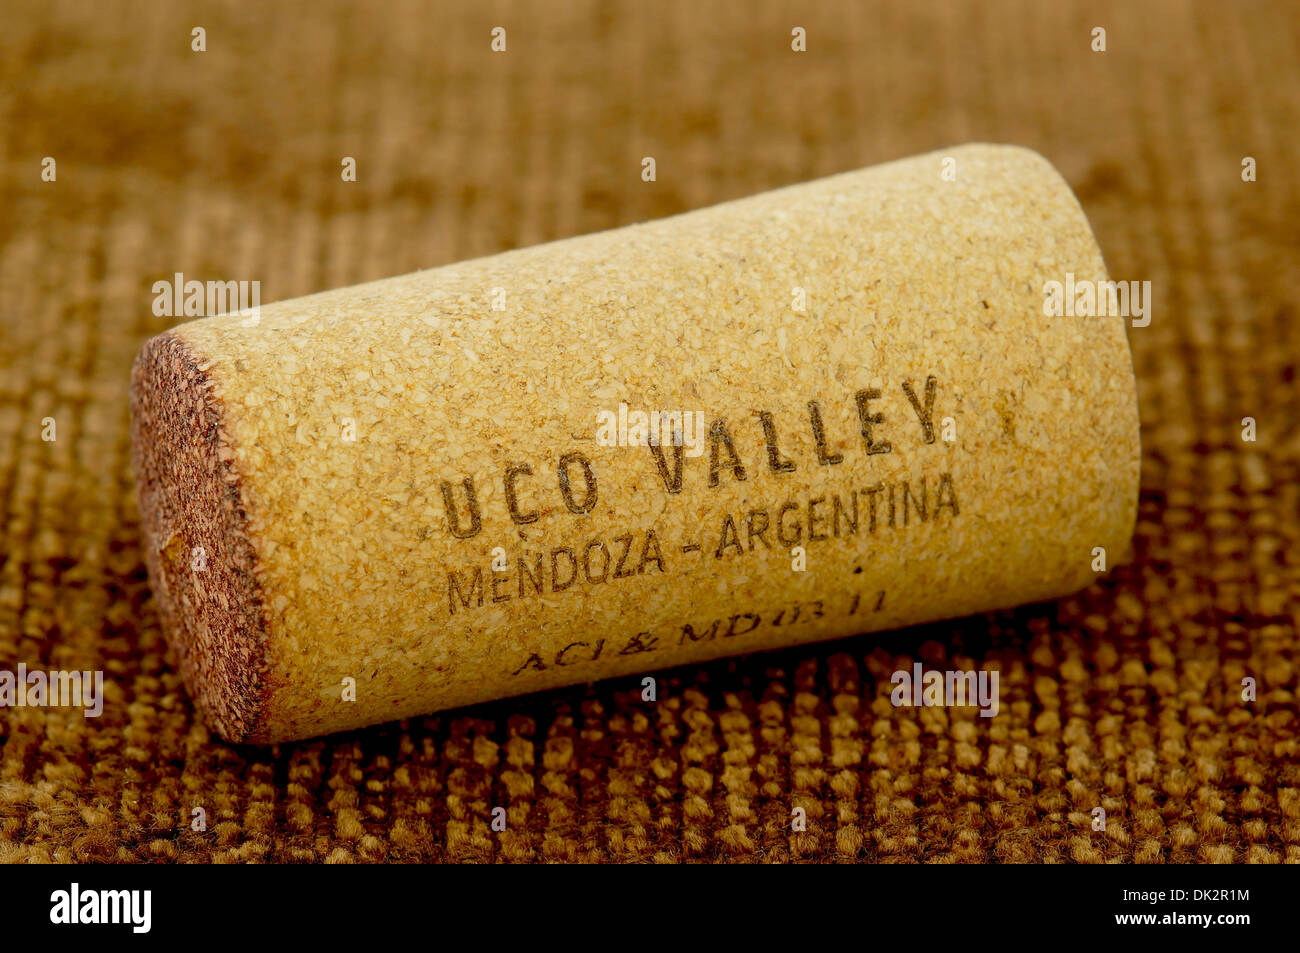 Uco Valley Mendoza Argentina wine cork stopper Stock Photo